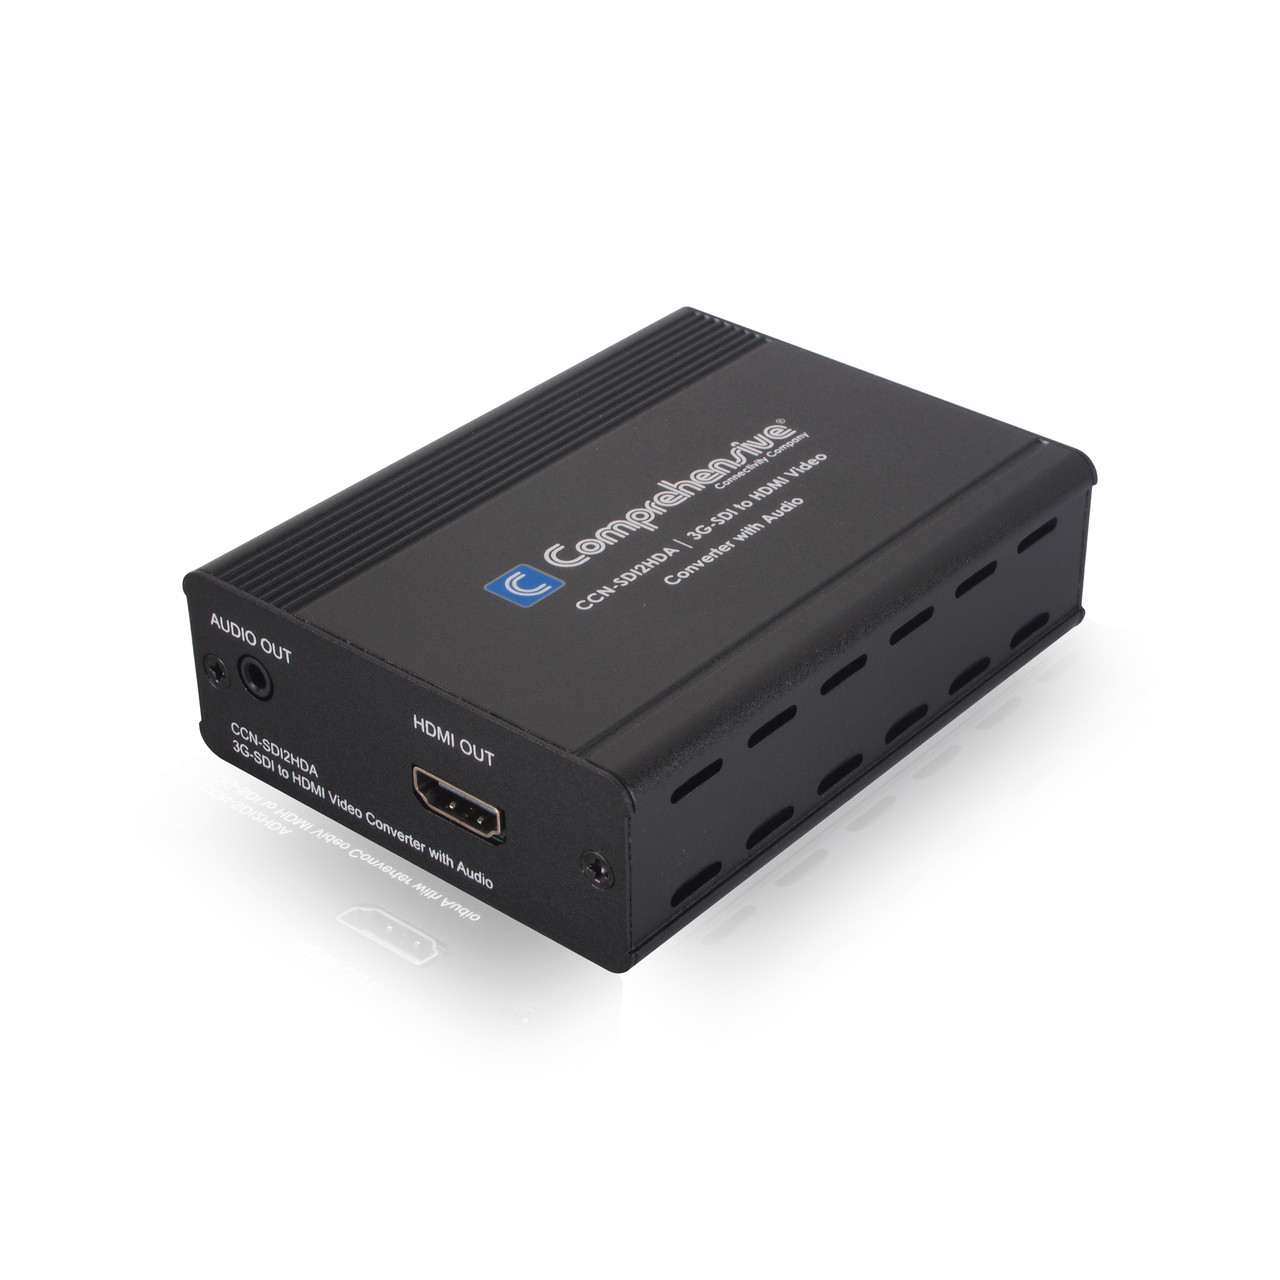 Pro AV/IT 3G-SDI to HDMI Video Converter with Audio